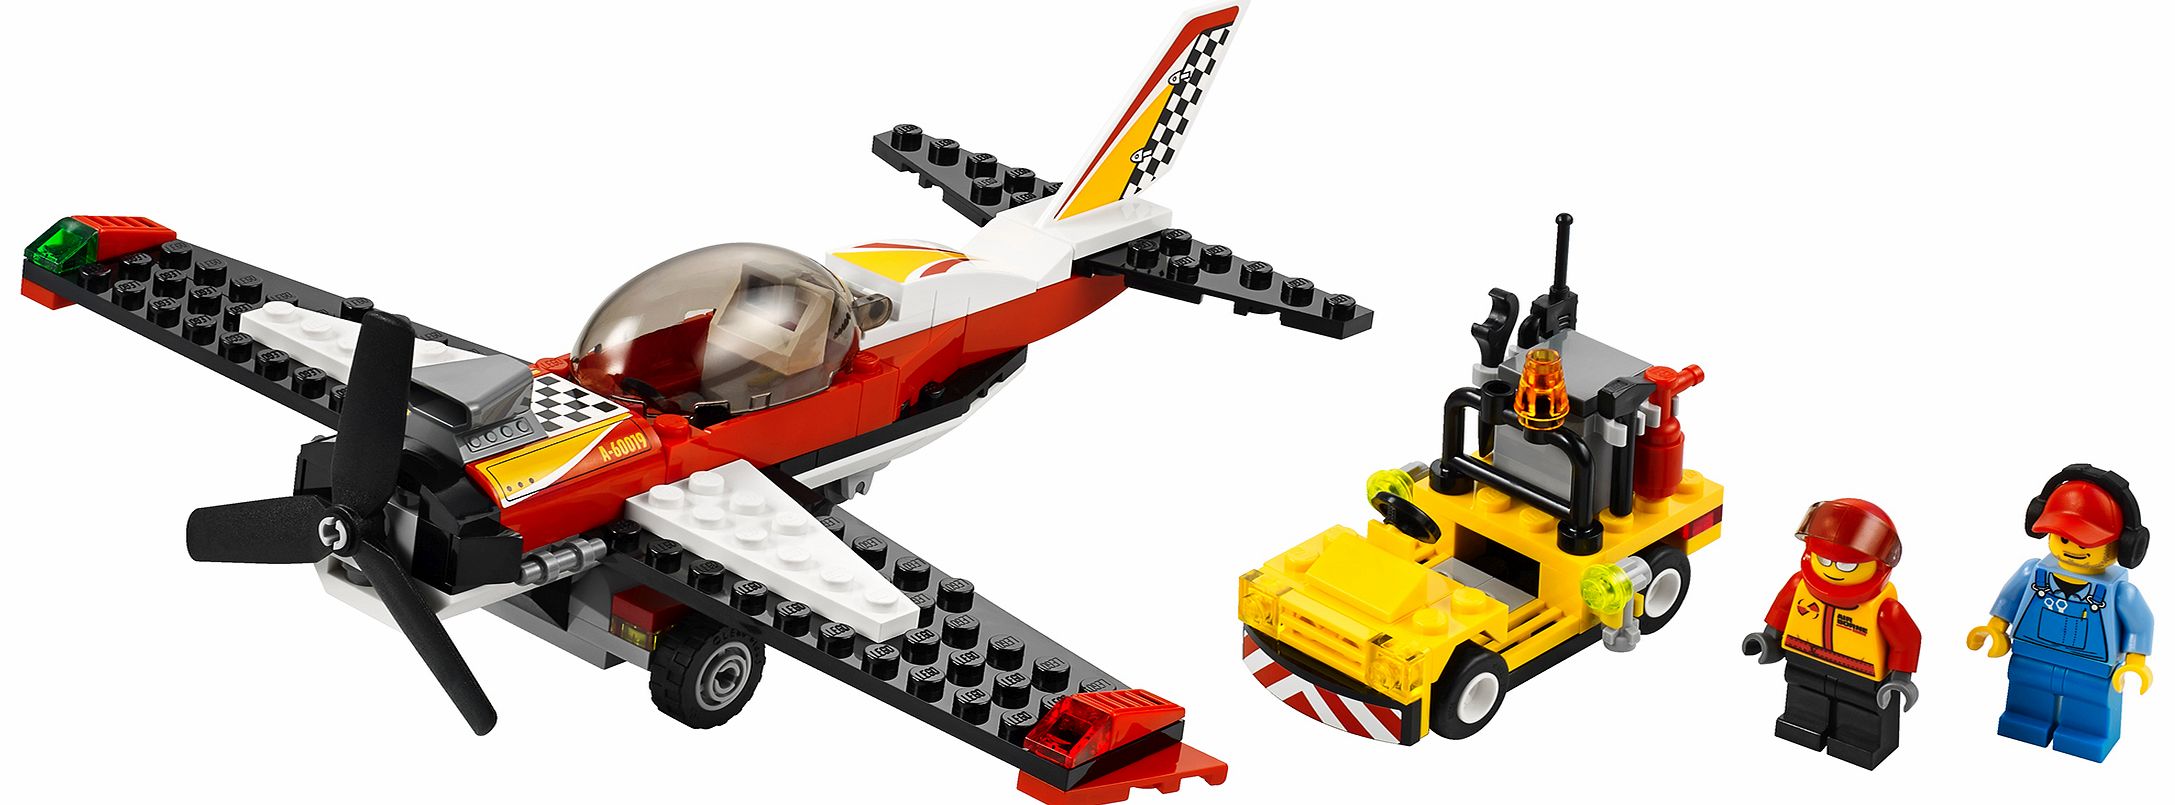 Lego City Stunt Plane 60019